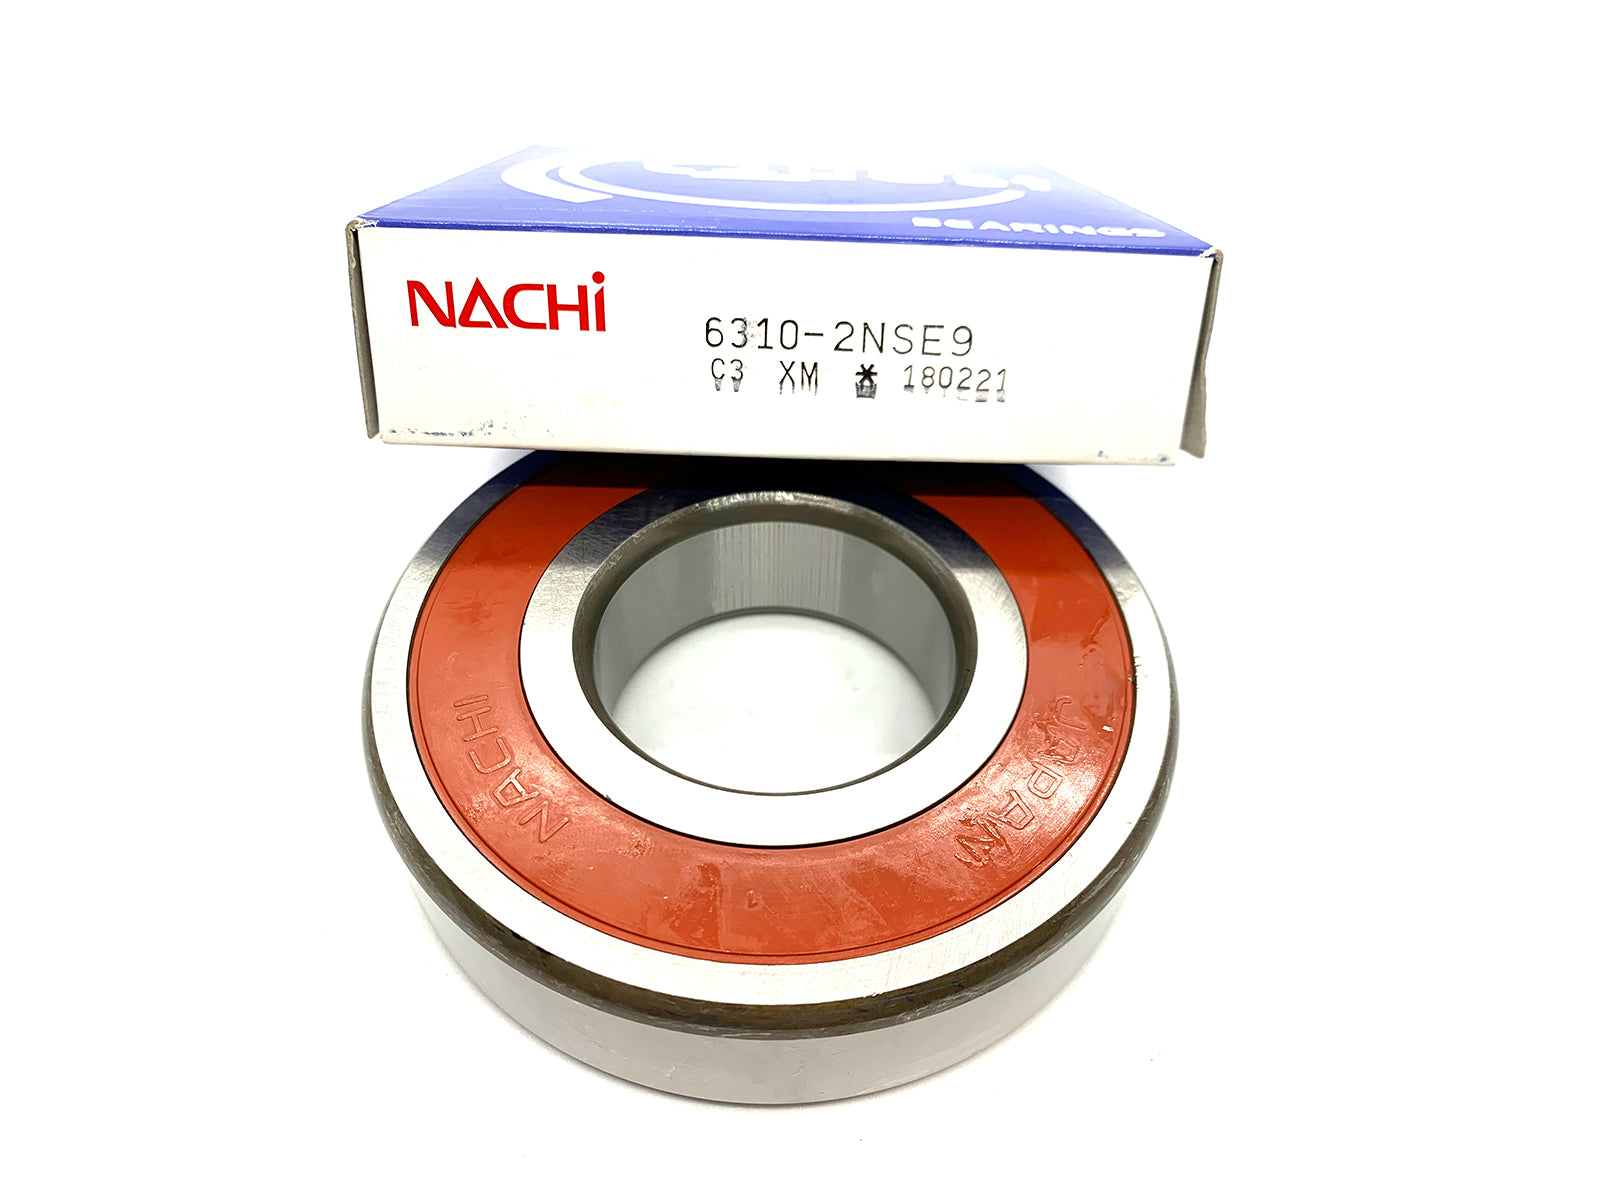 6310-2NSE9 C3 Nachi Ball Bearing - ppdistributors